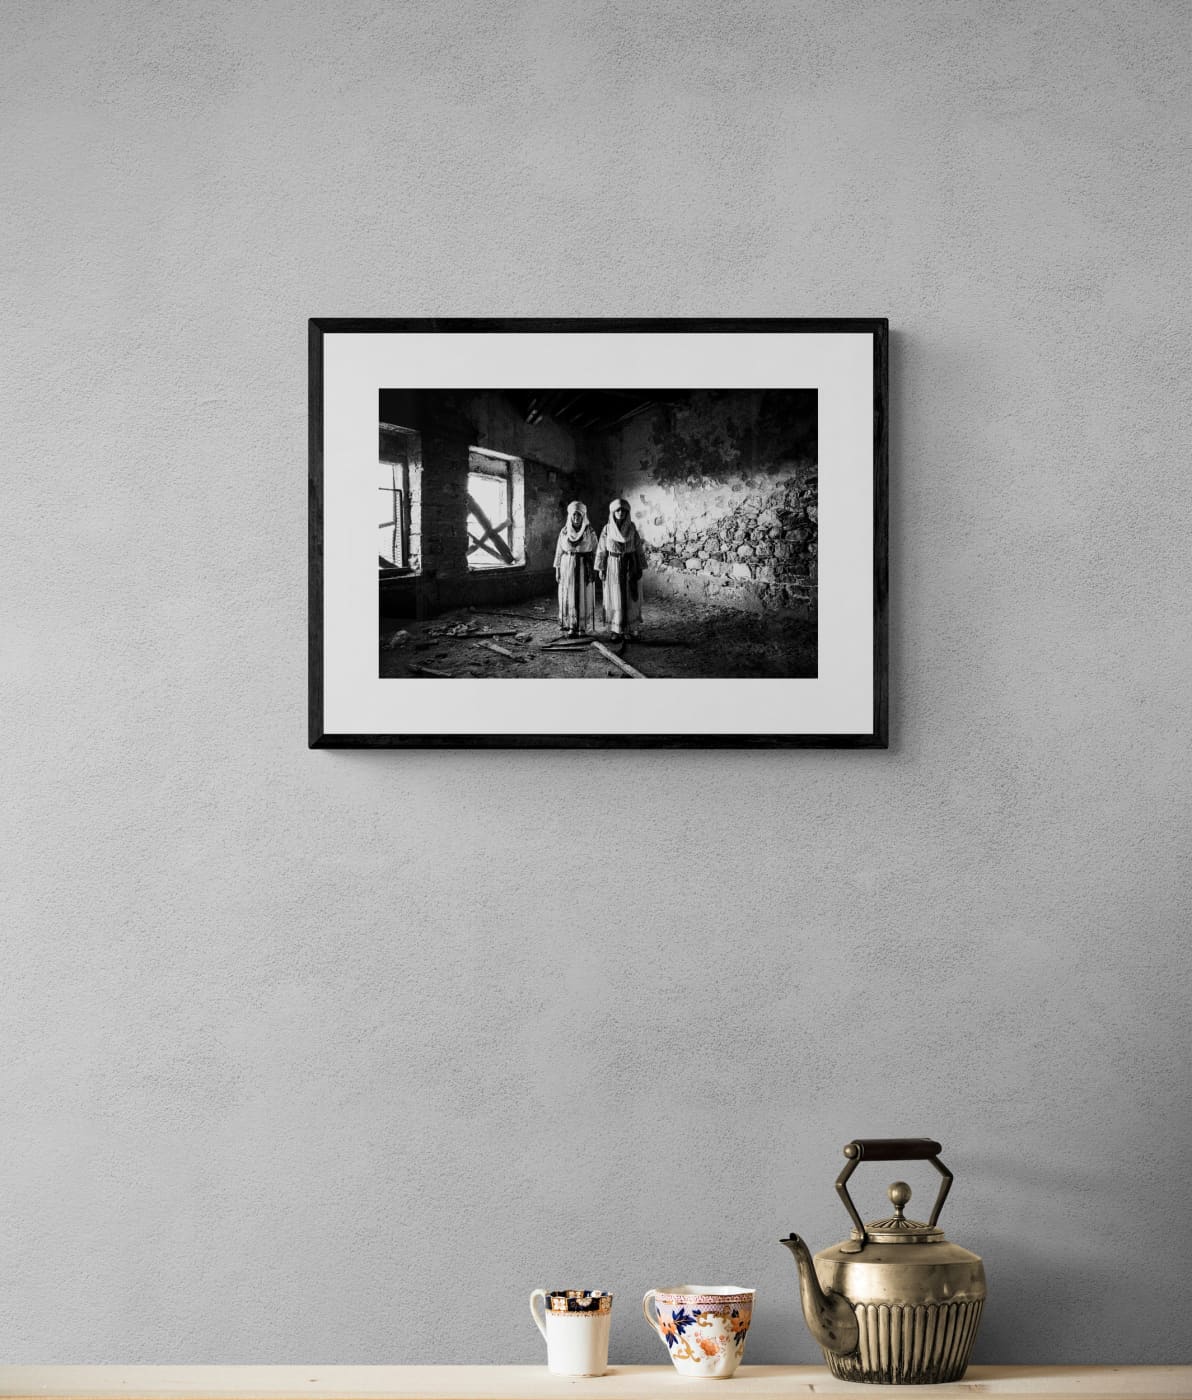 Black and White Photography Wall Art Greece | Kallamoti costumes Chios island Greece by George Tatakis - single framed photo